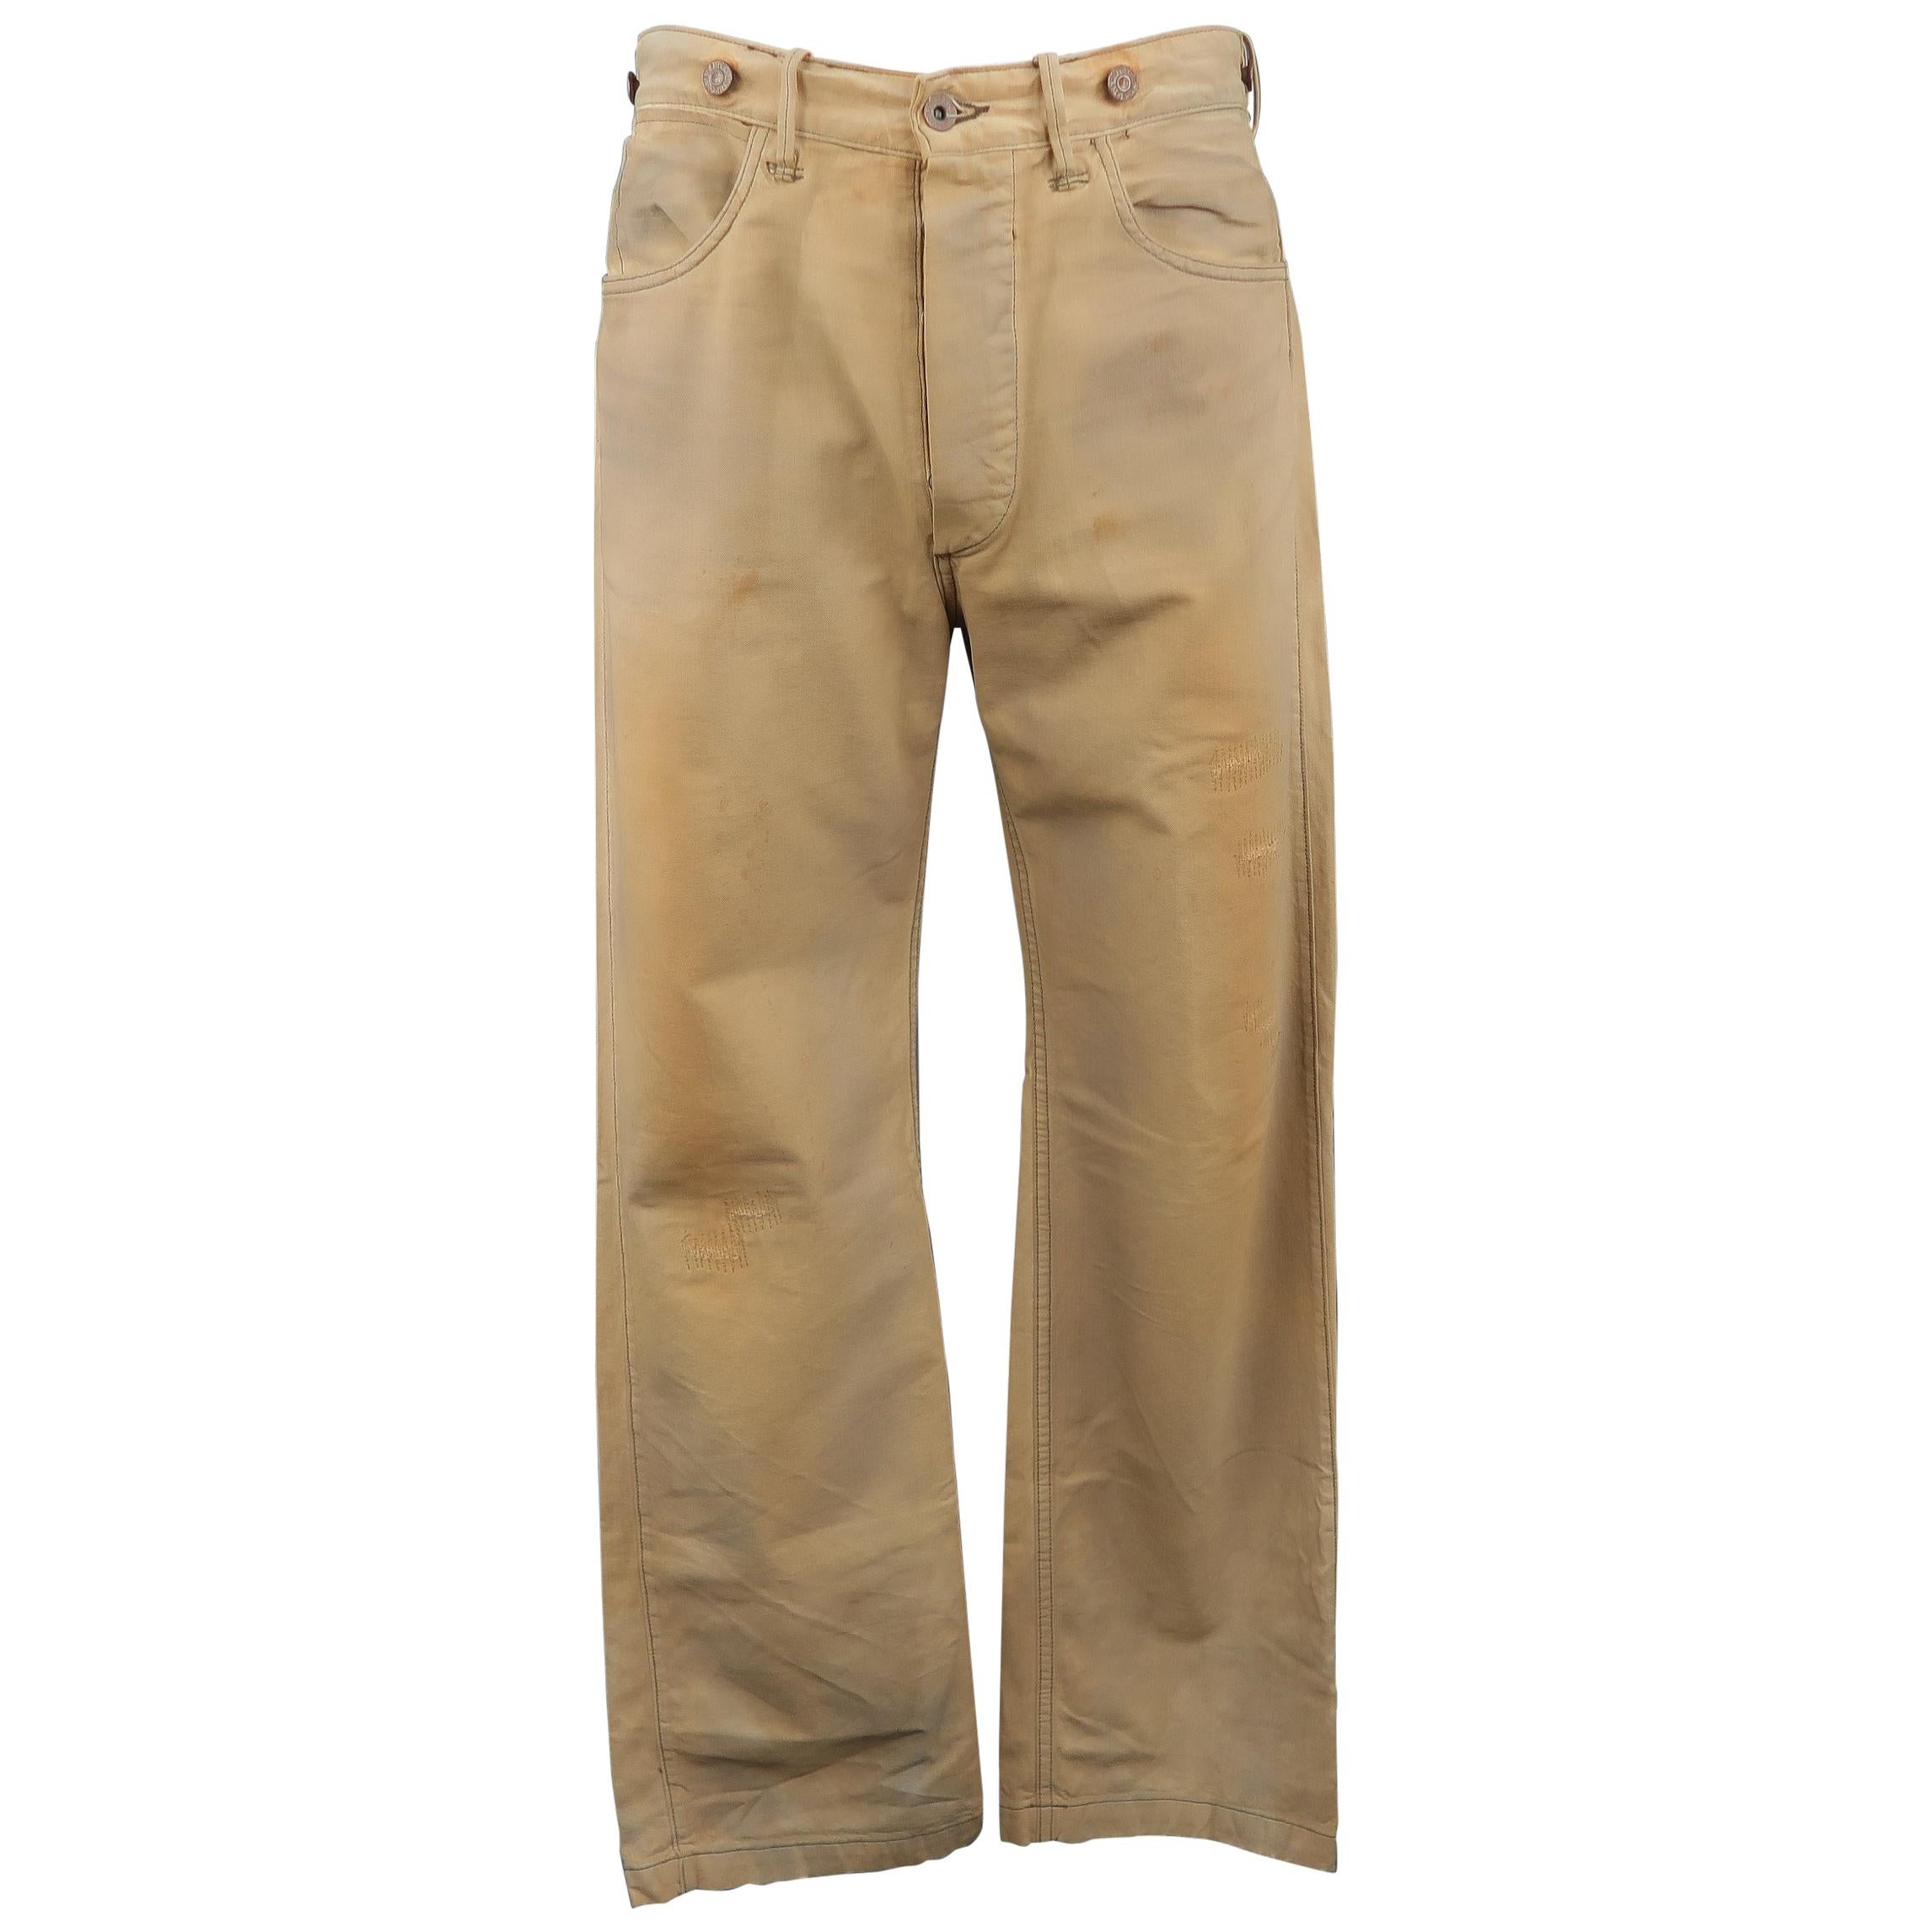 RRL by RALPH LAUREN Size 32 Khaki Dirty Wash Distressed Cotton Denim Jeans